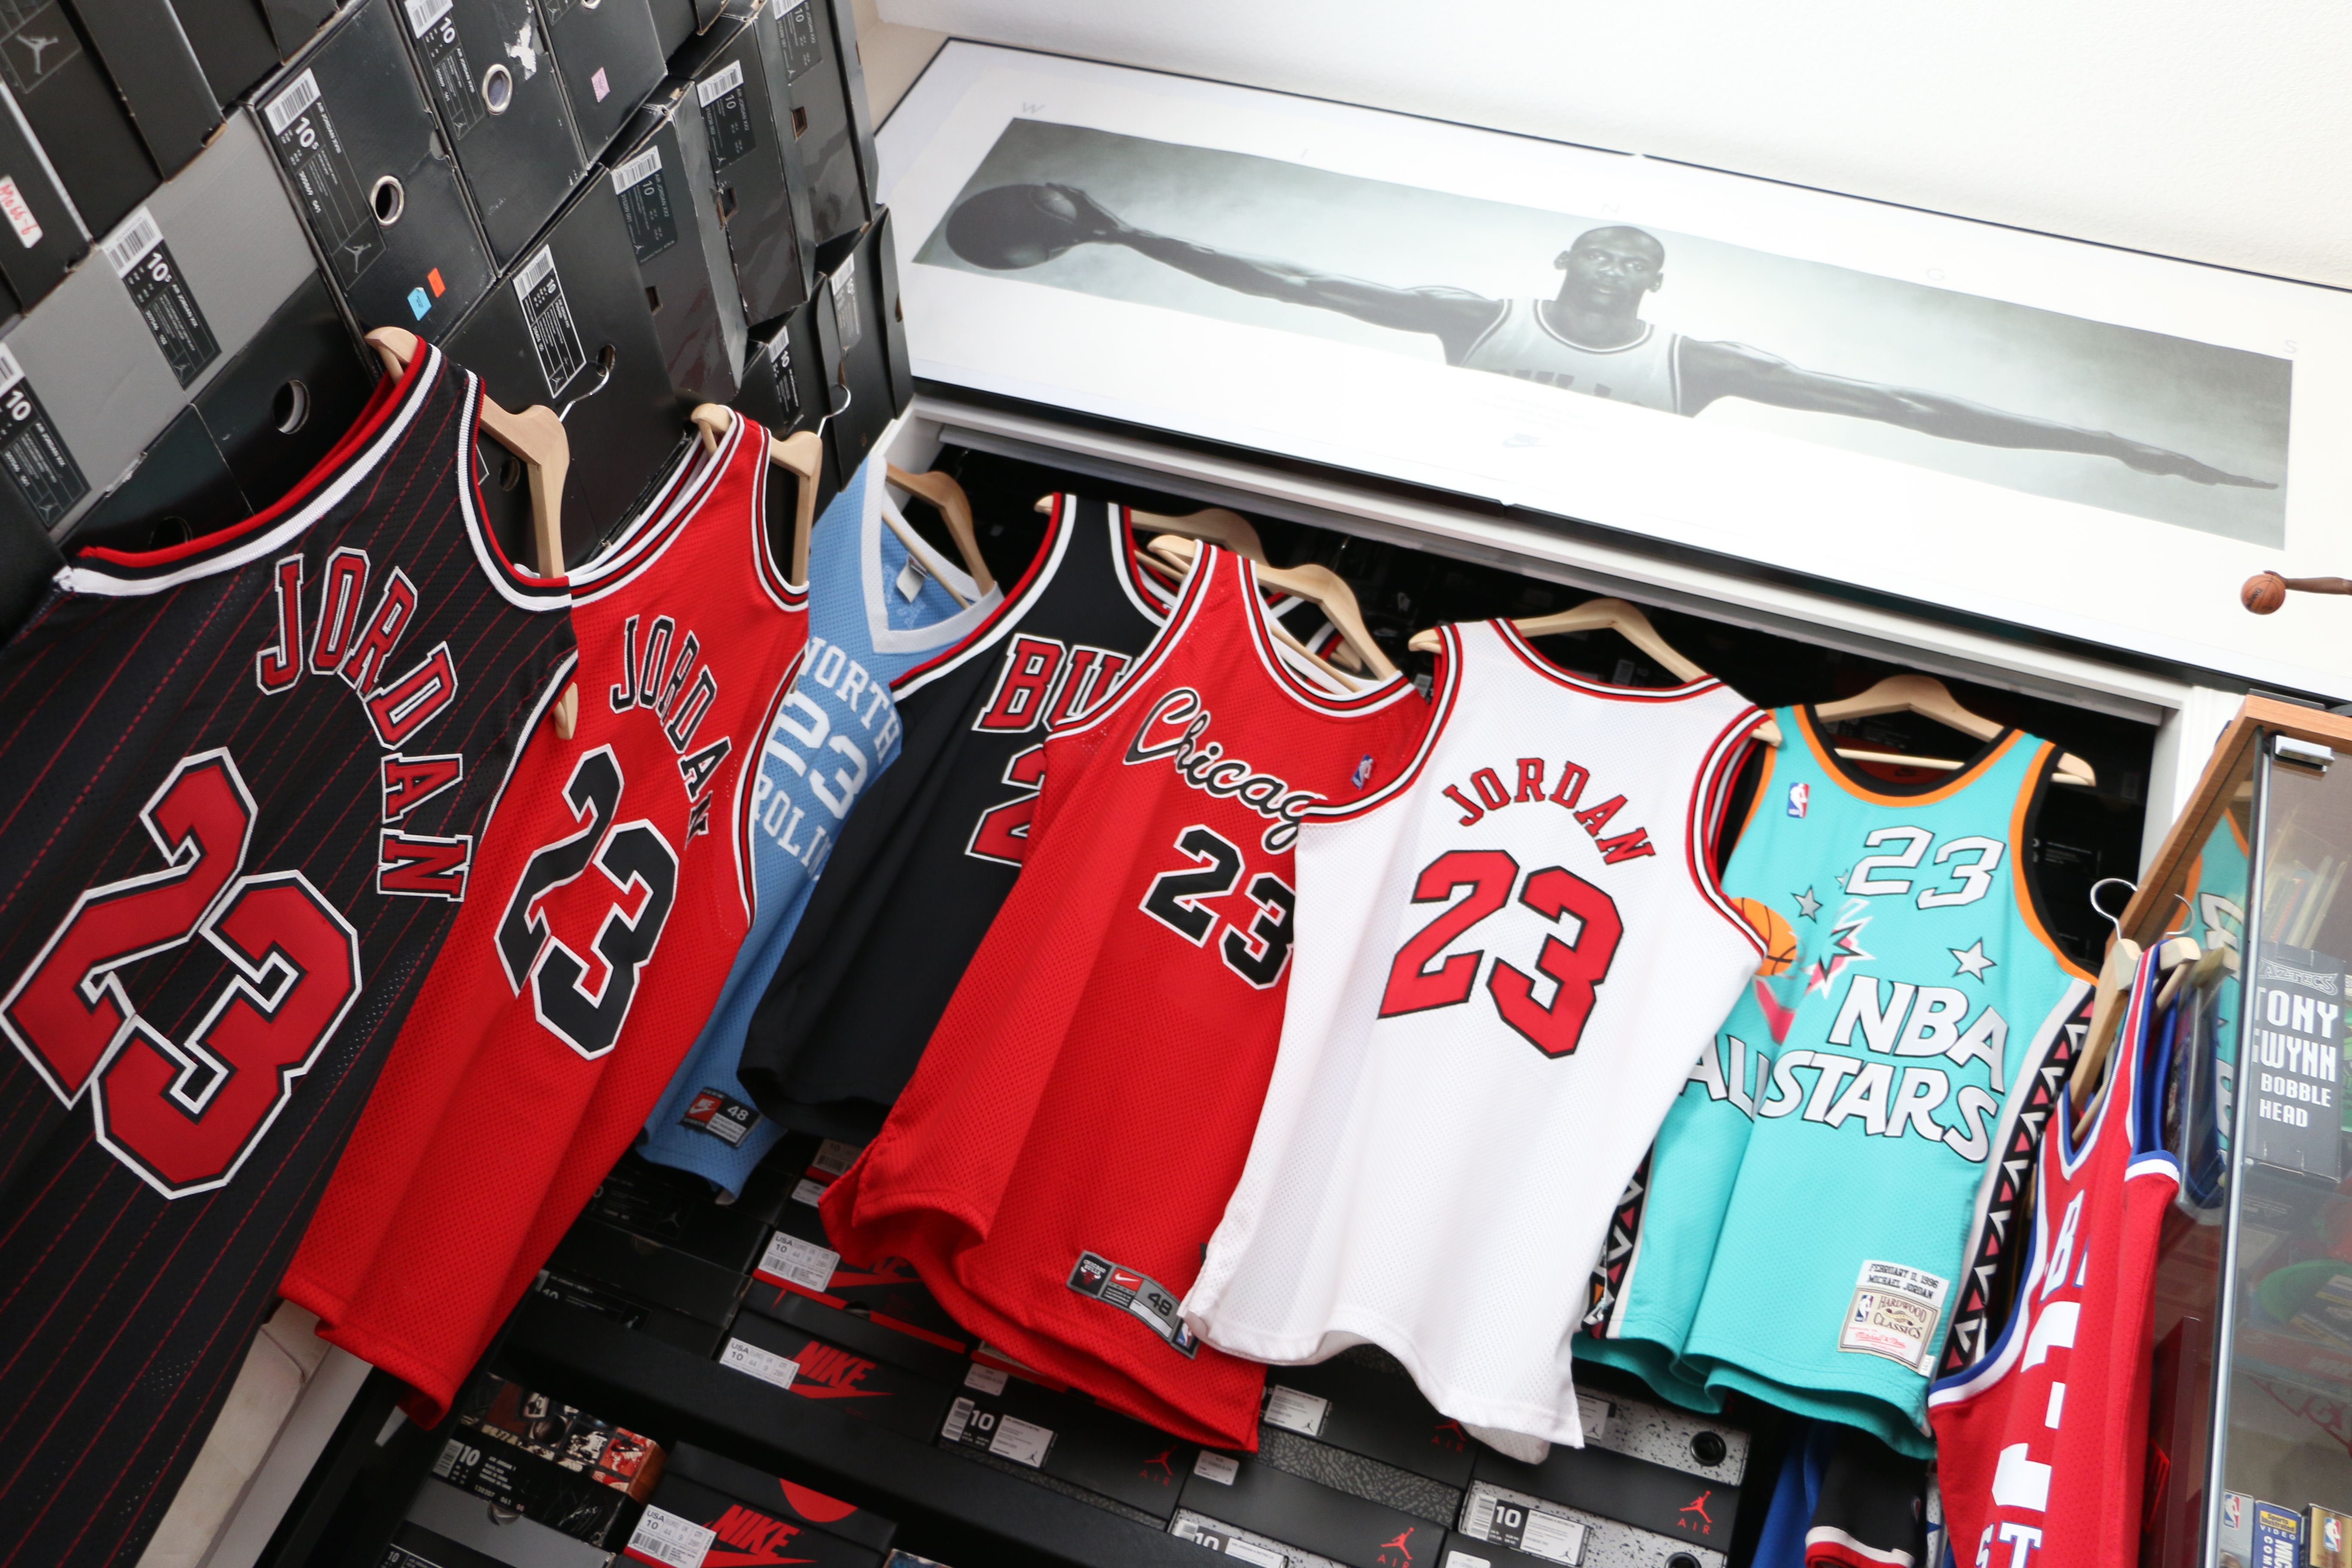 Michael Jordan's Bulls Jersey Returns in Swoosh Mode - WearTesters